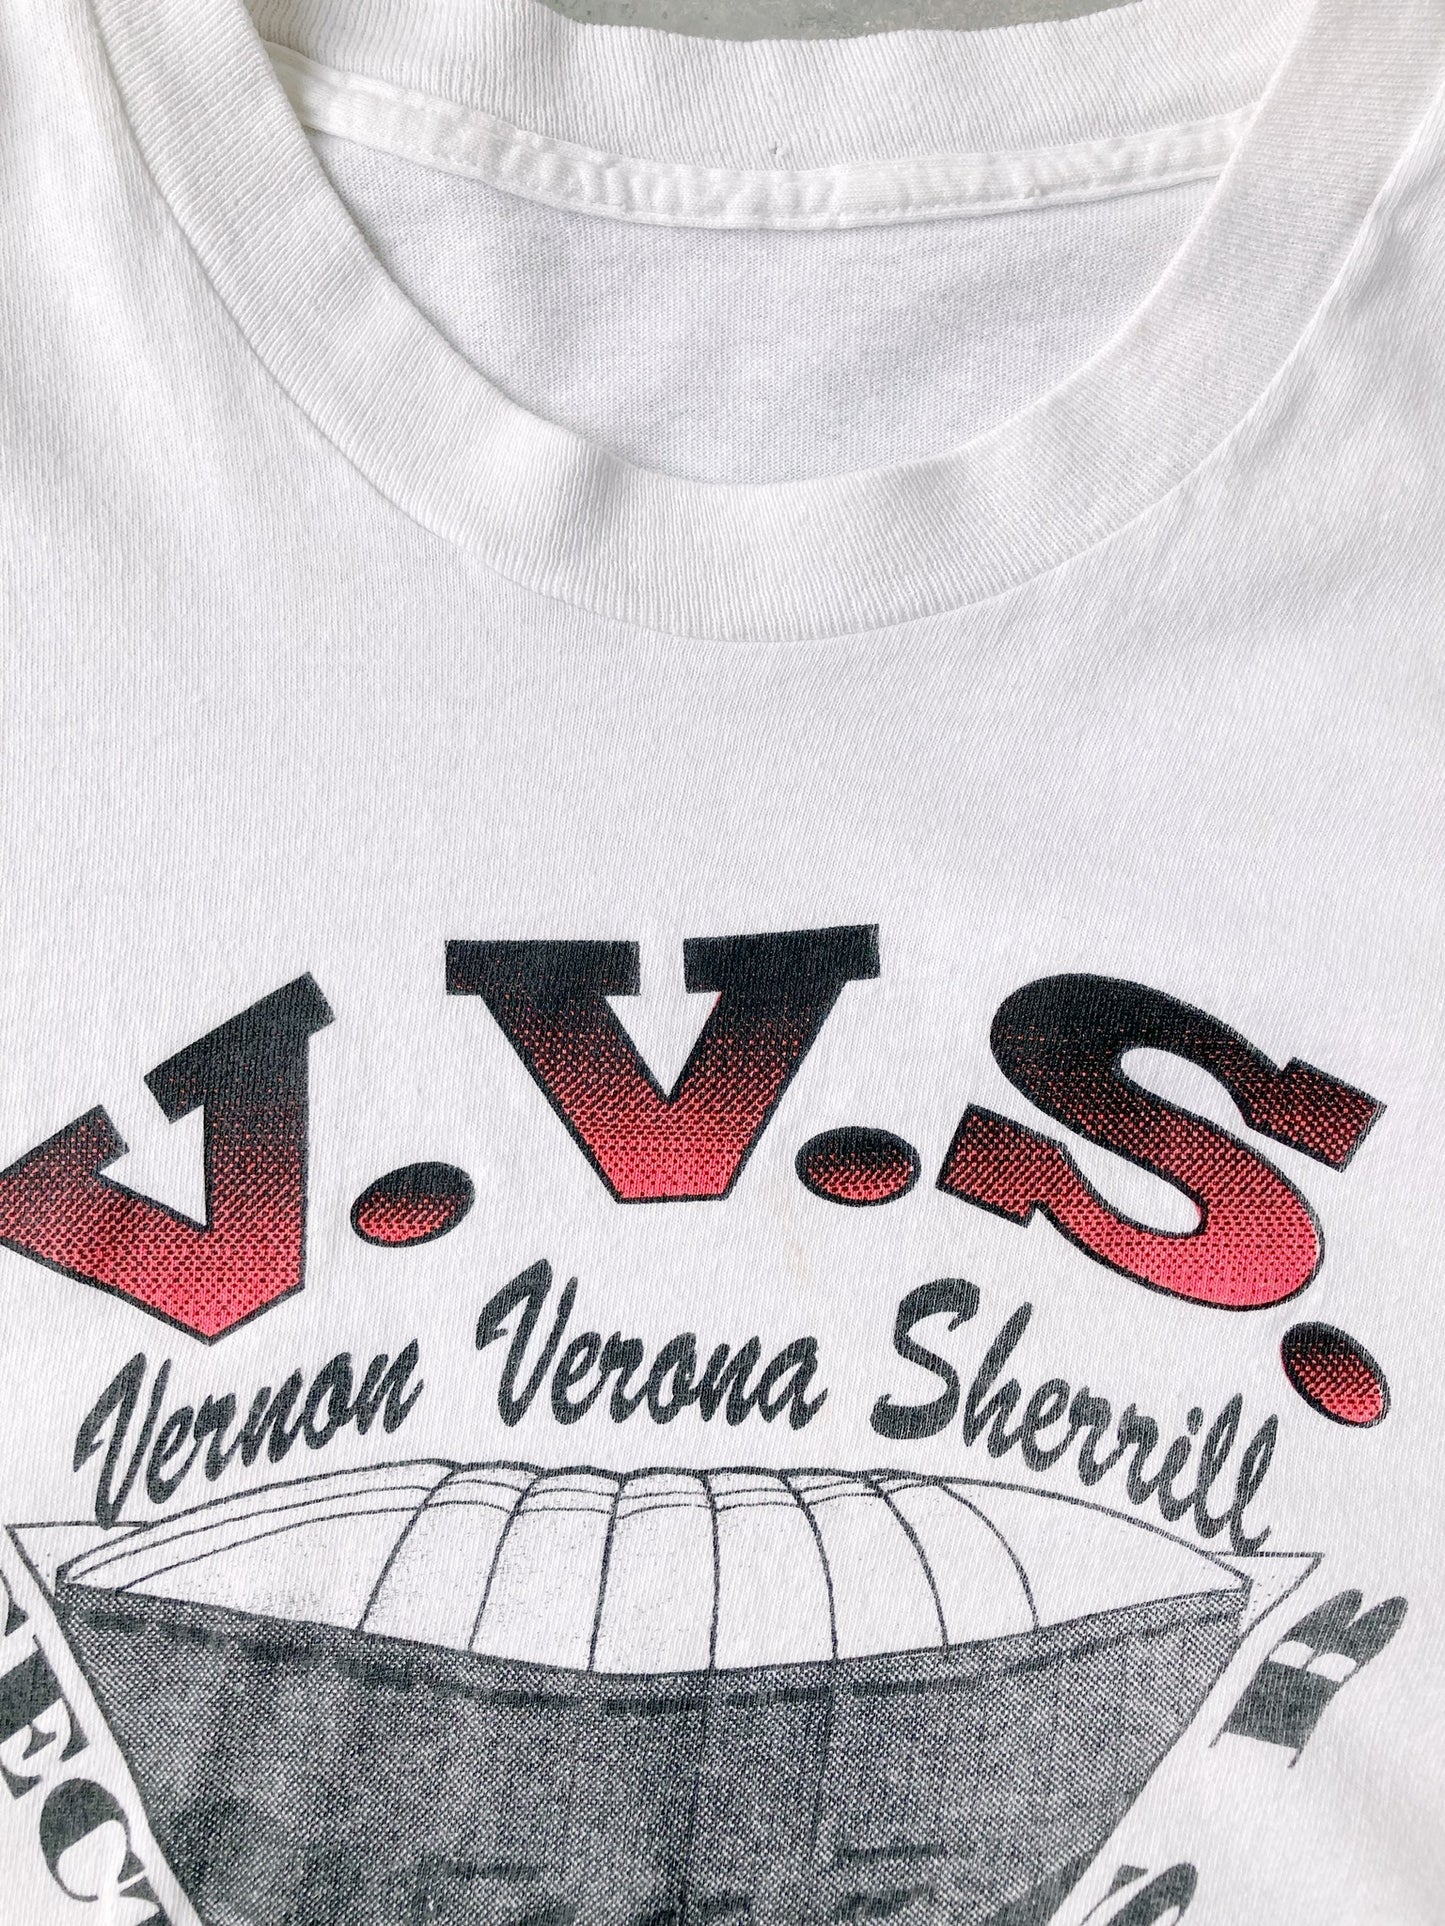 Vernon Verona Sherrill Champions '90 - Medium / Large